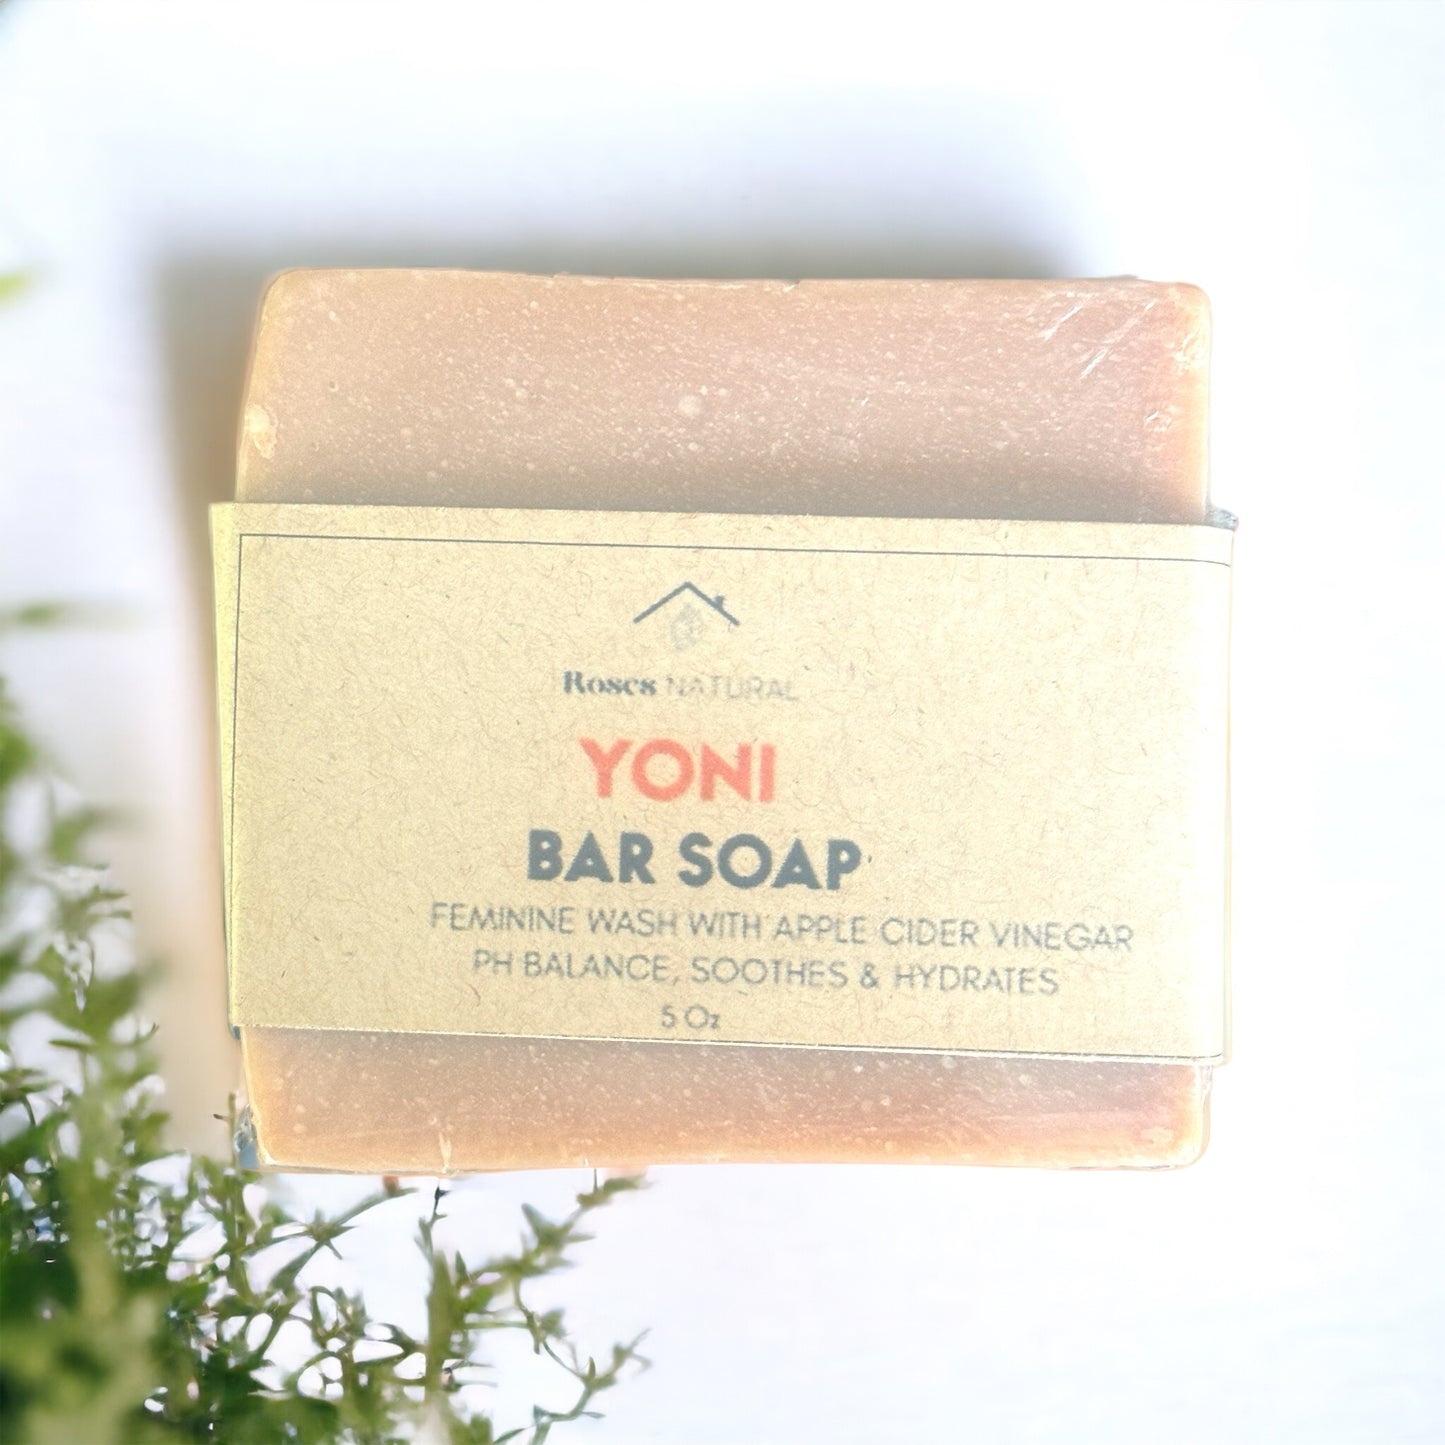 Yoni Bar Soap - Feminine Wash